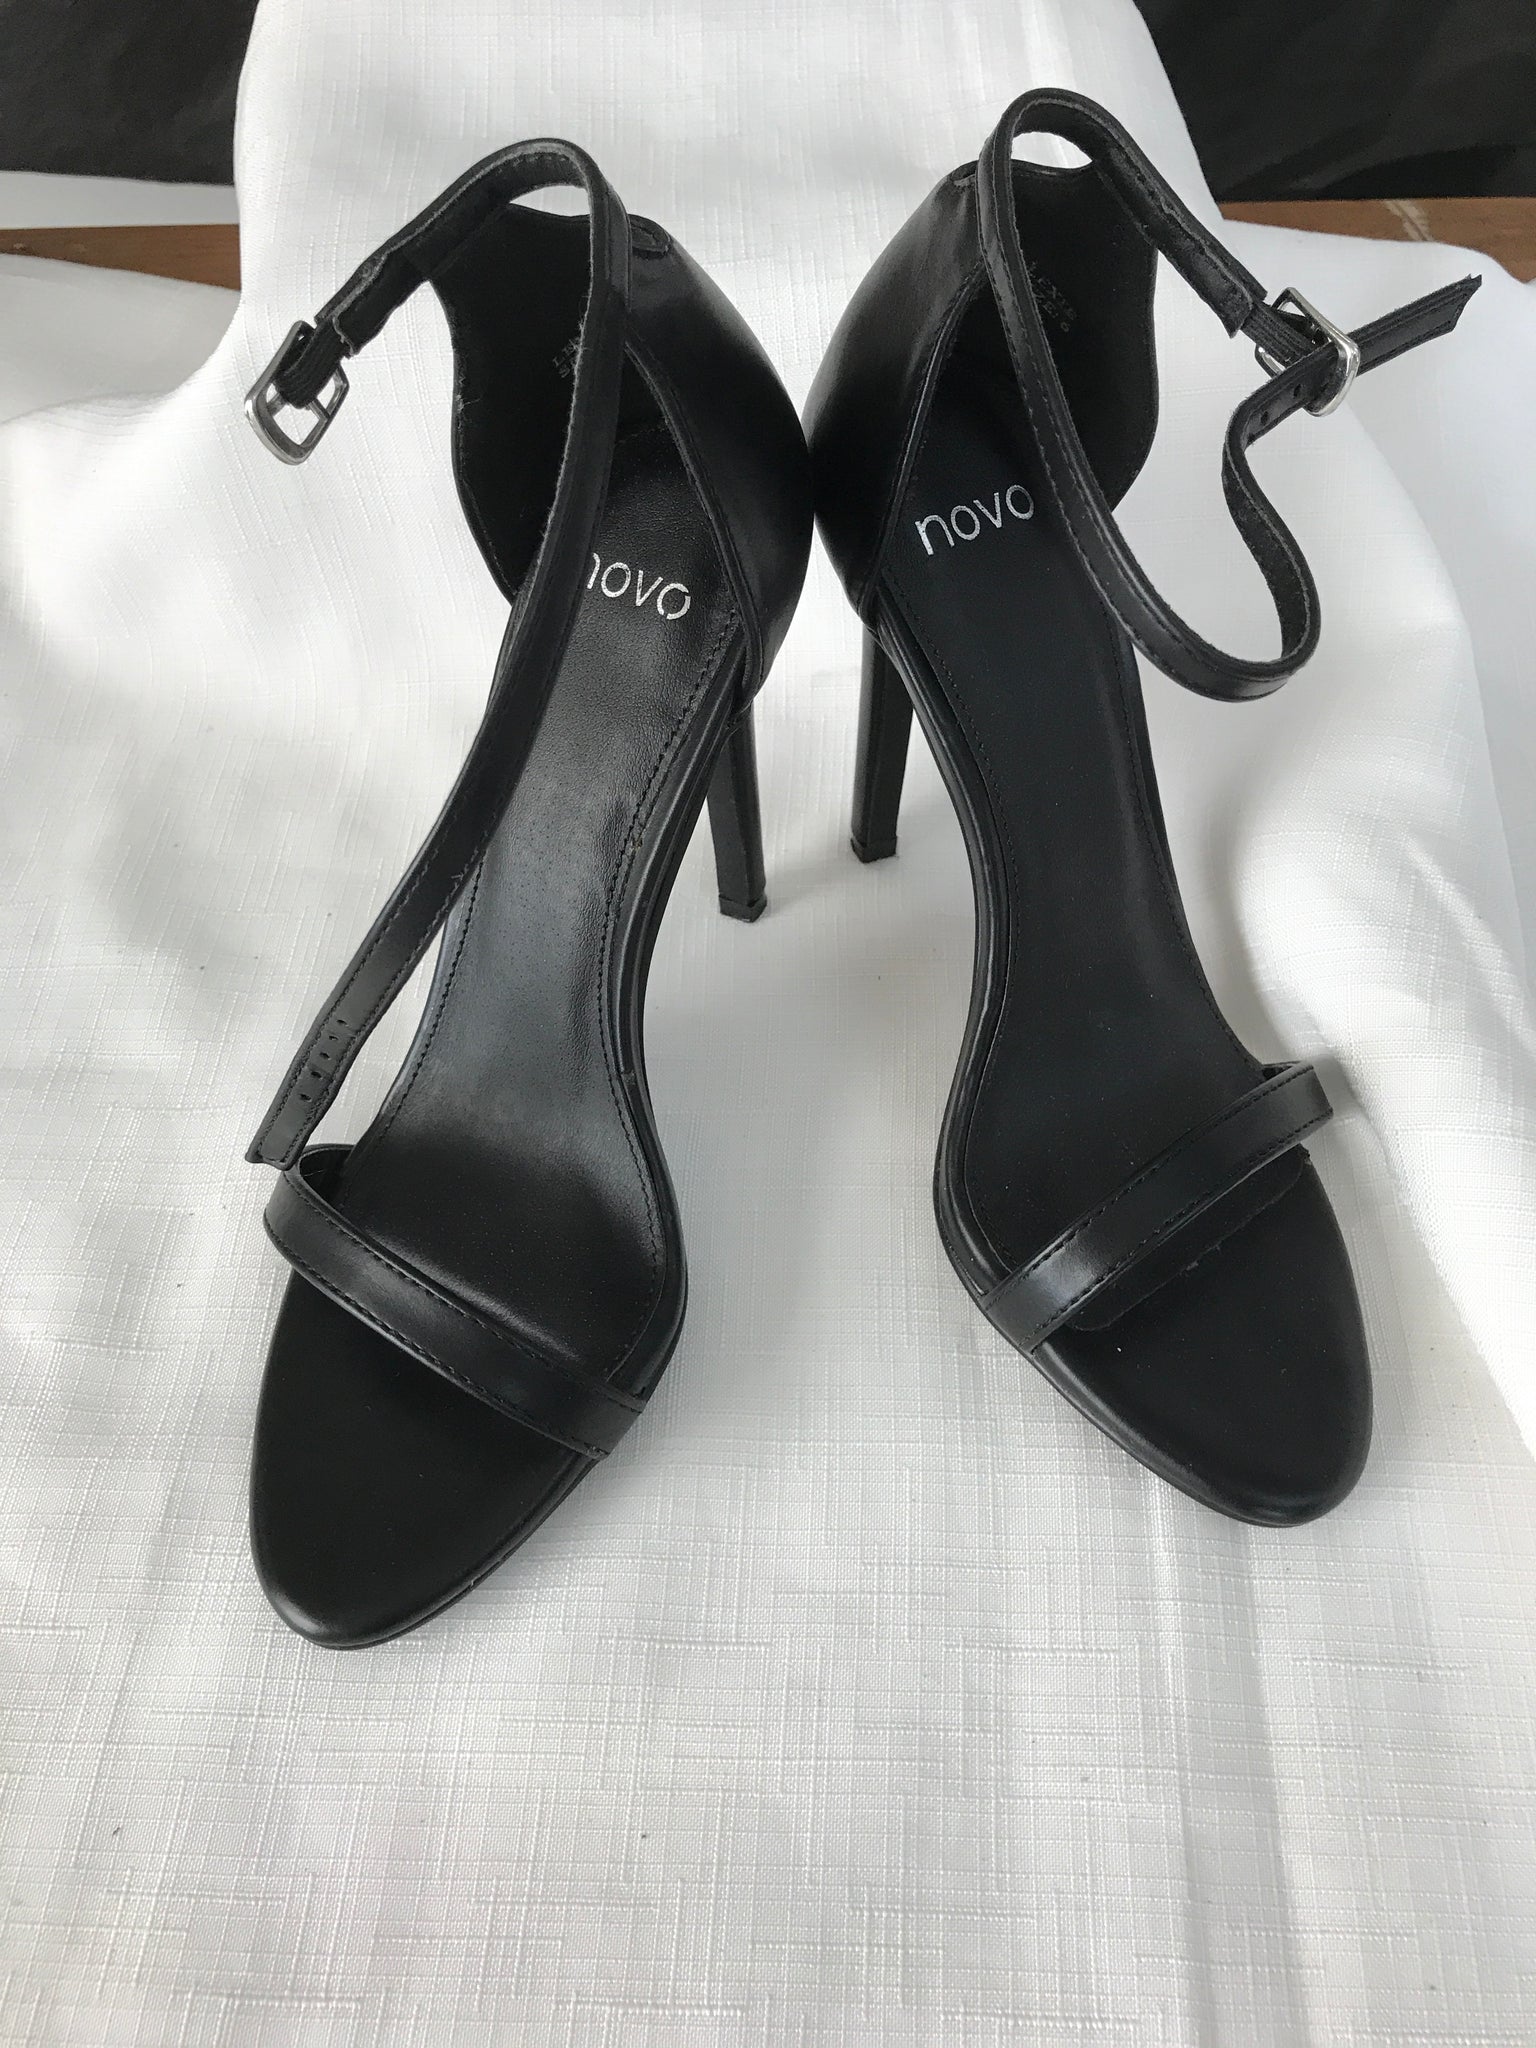 novo heels